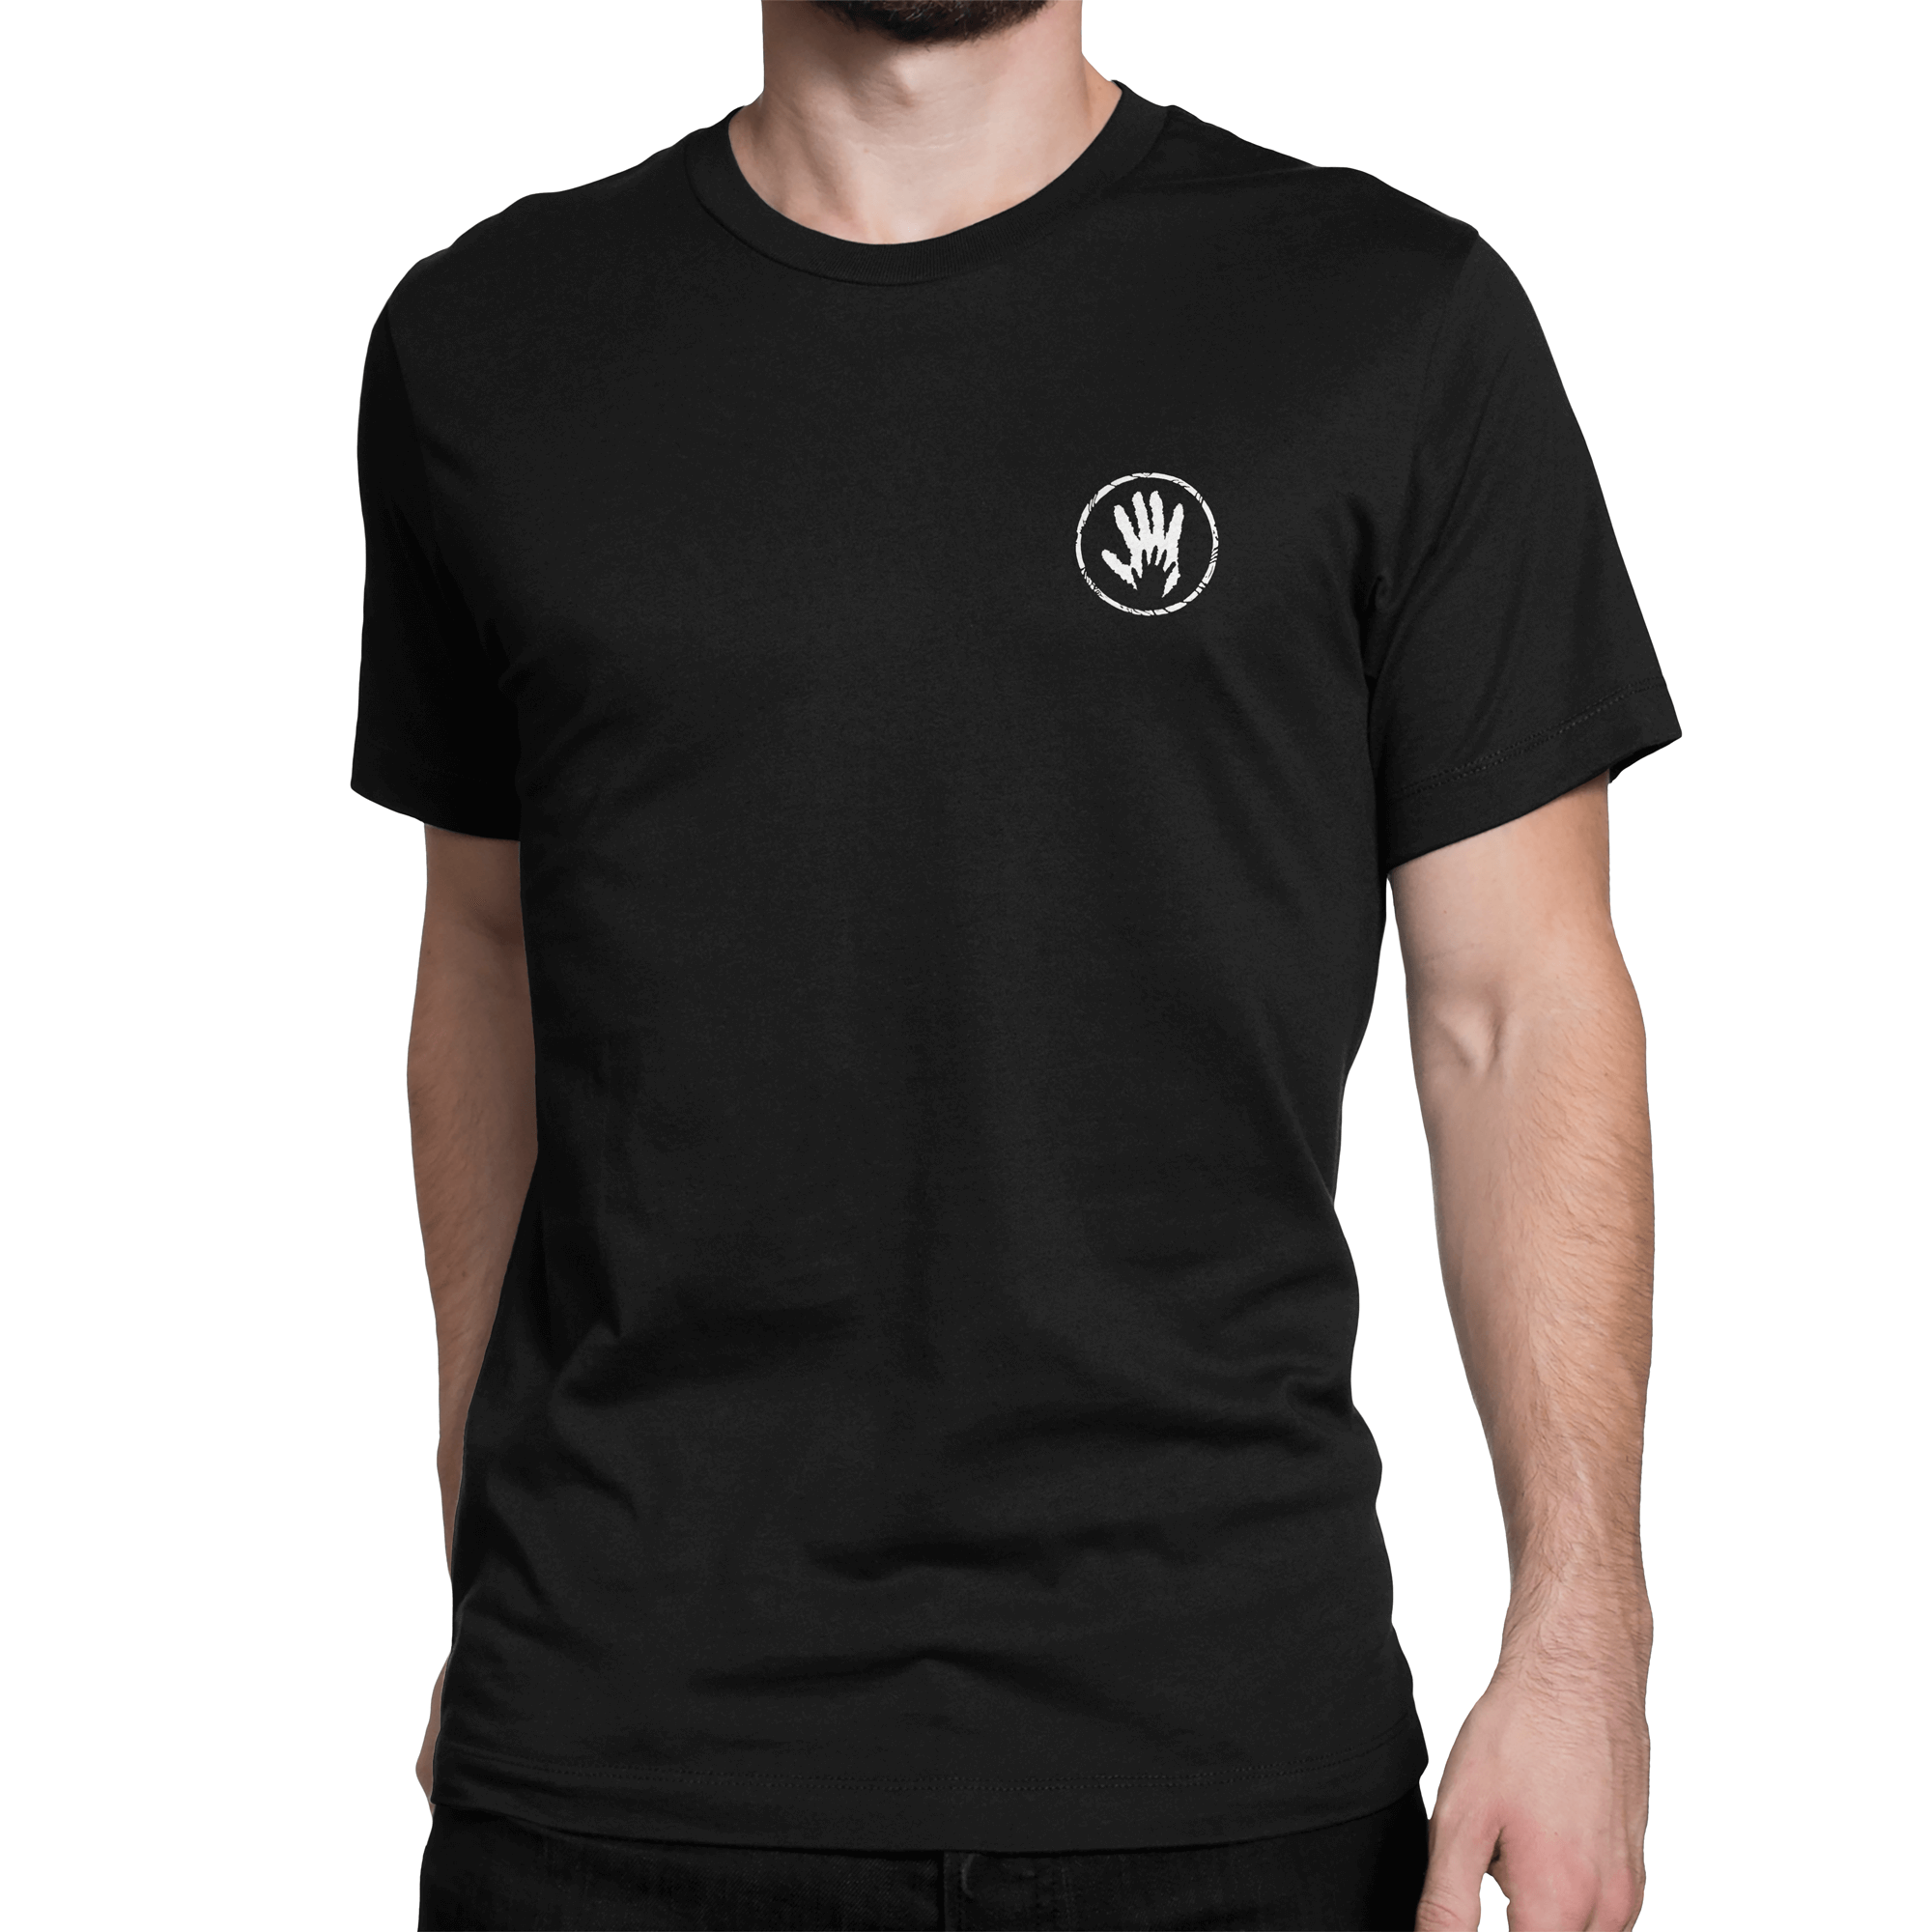 TYB Premium T-Shirt, black, hands and rays